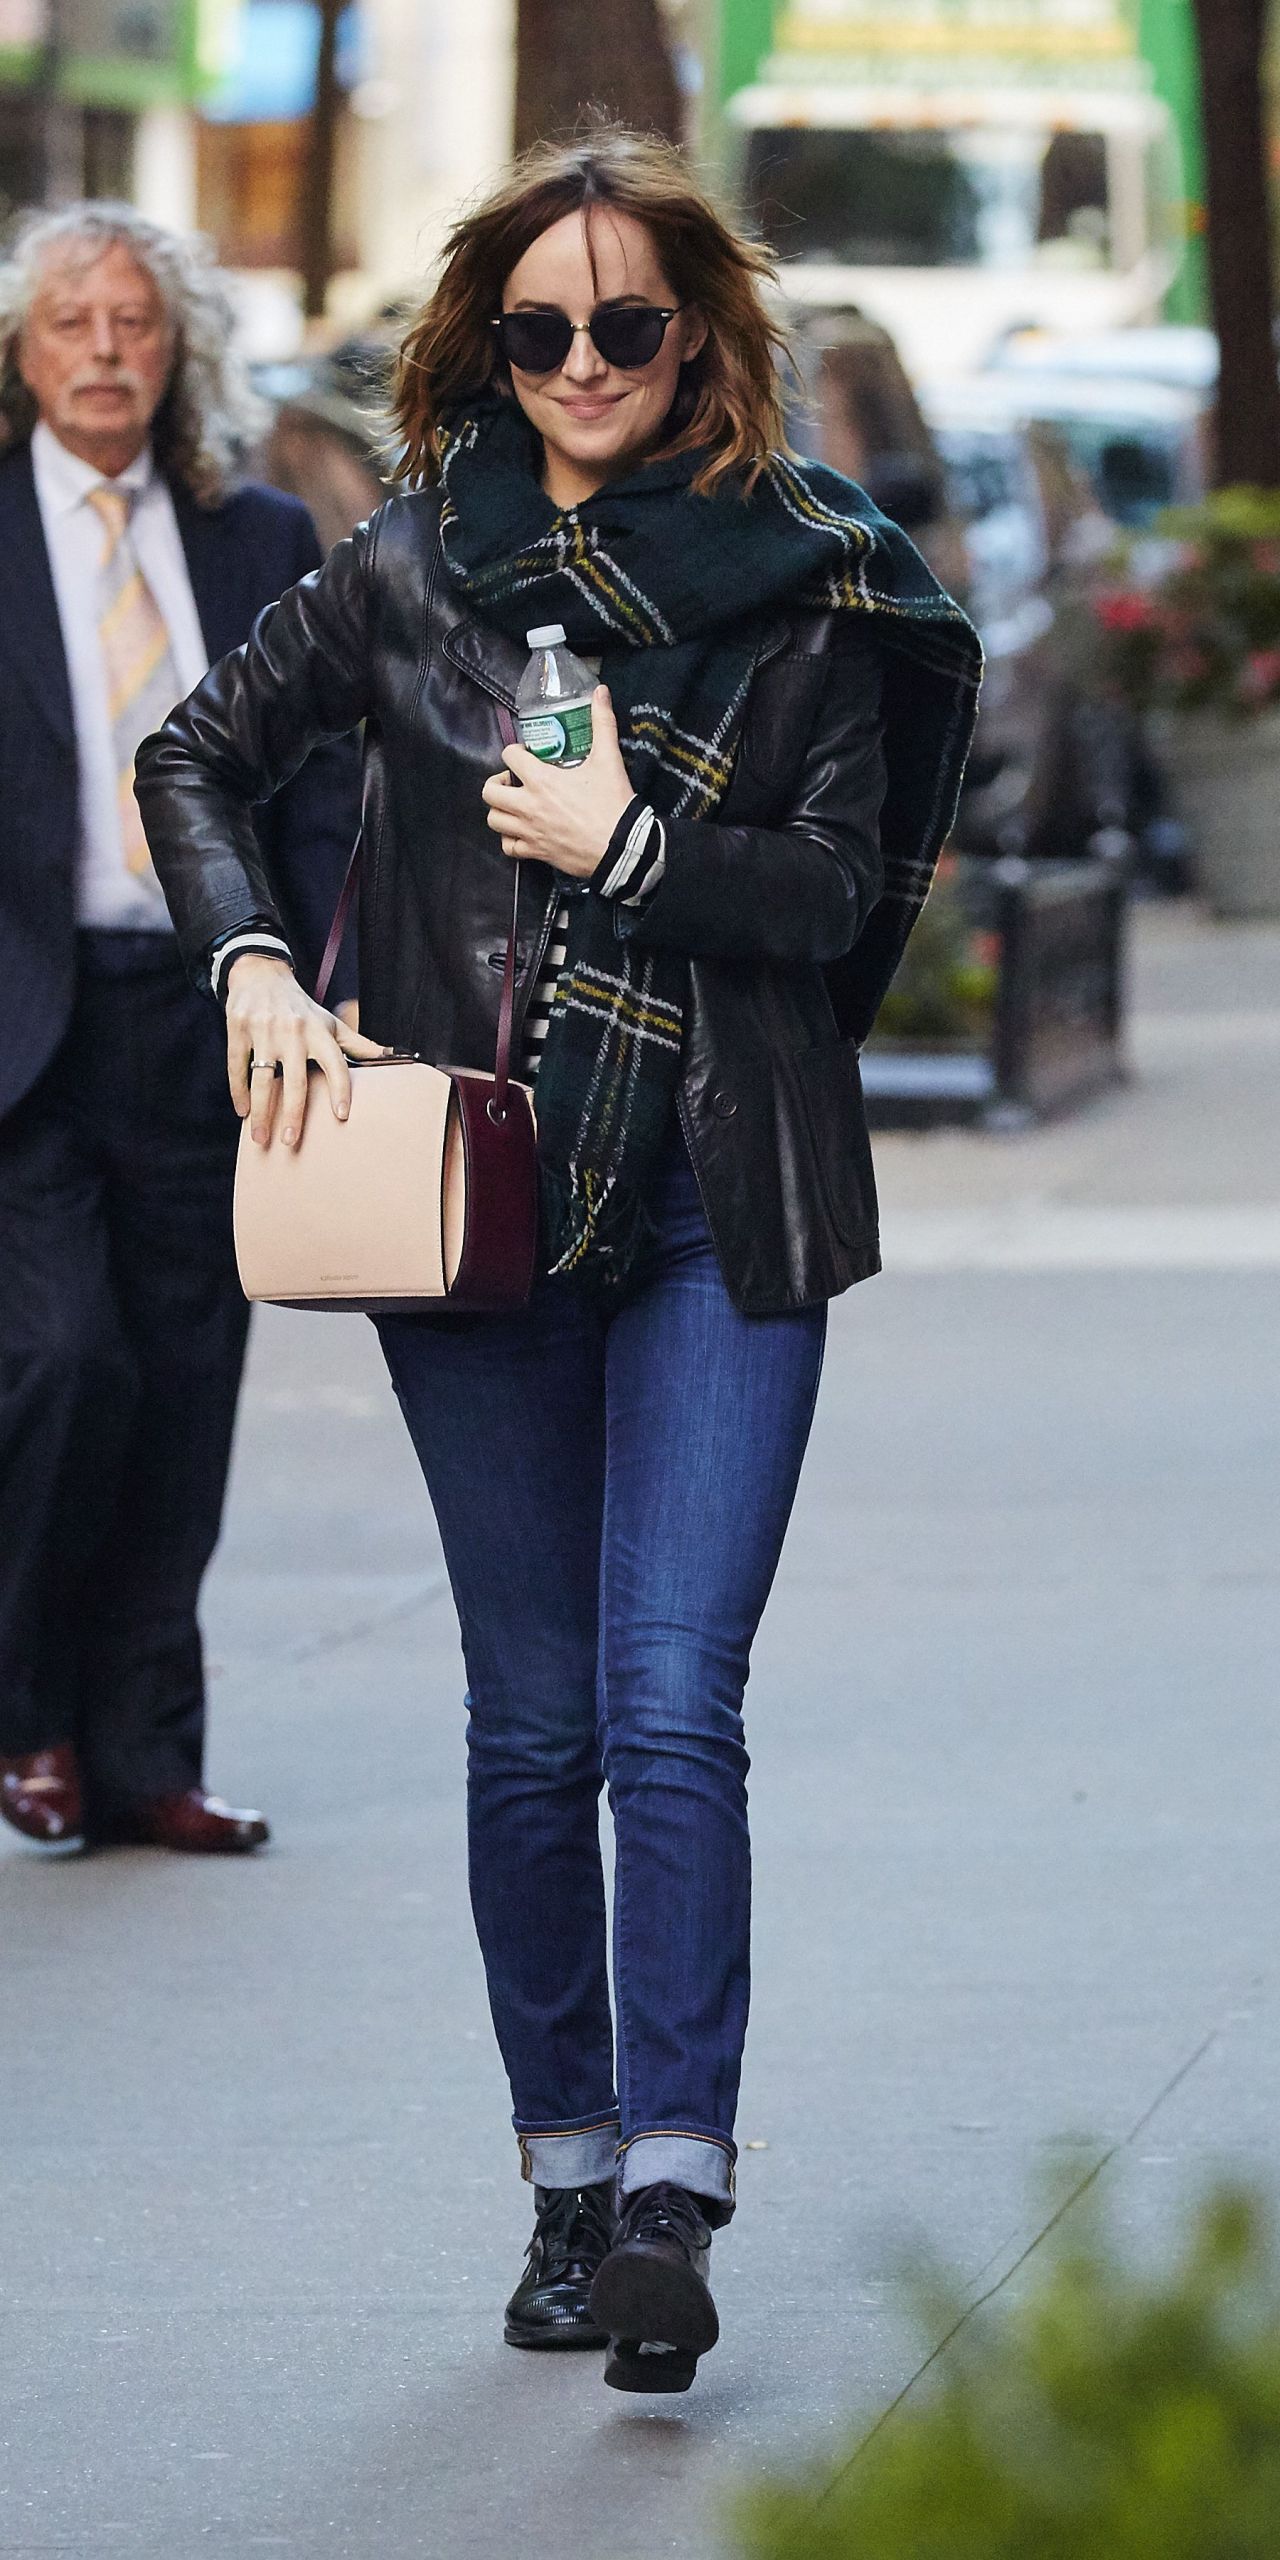 Dakota Johnson West Village October 12, 2015 – Star Style